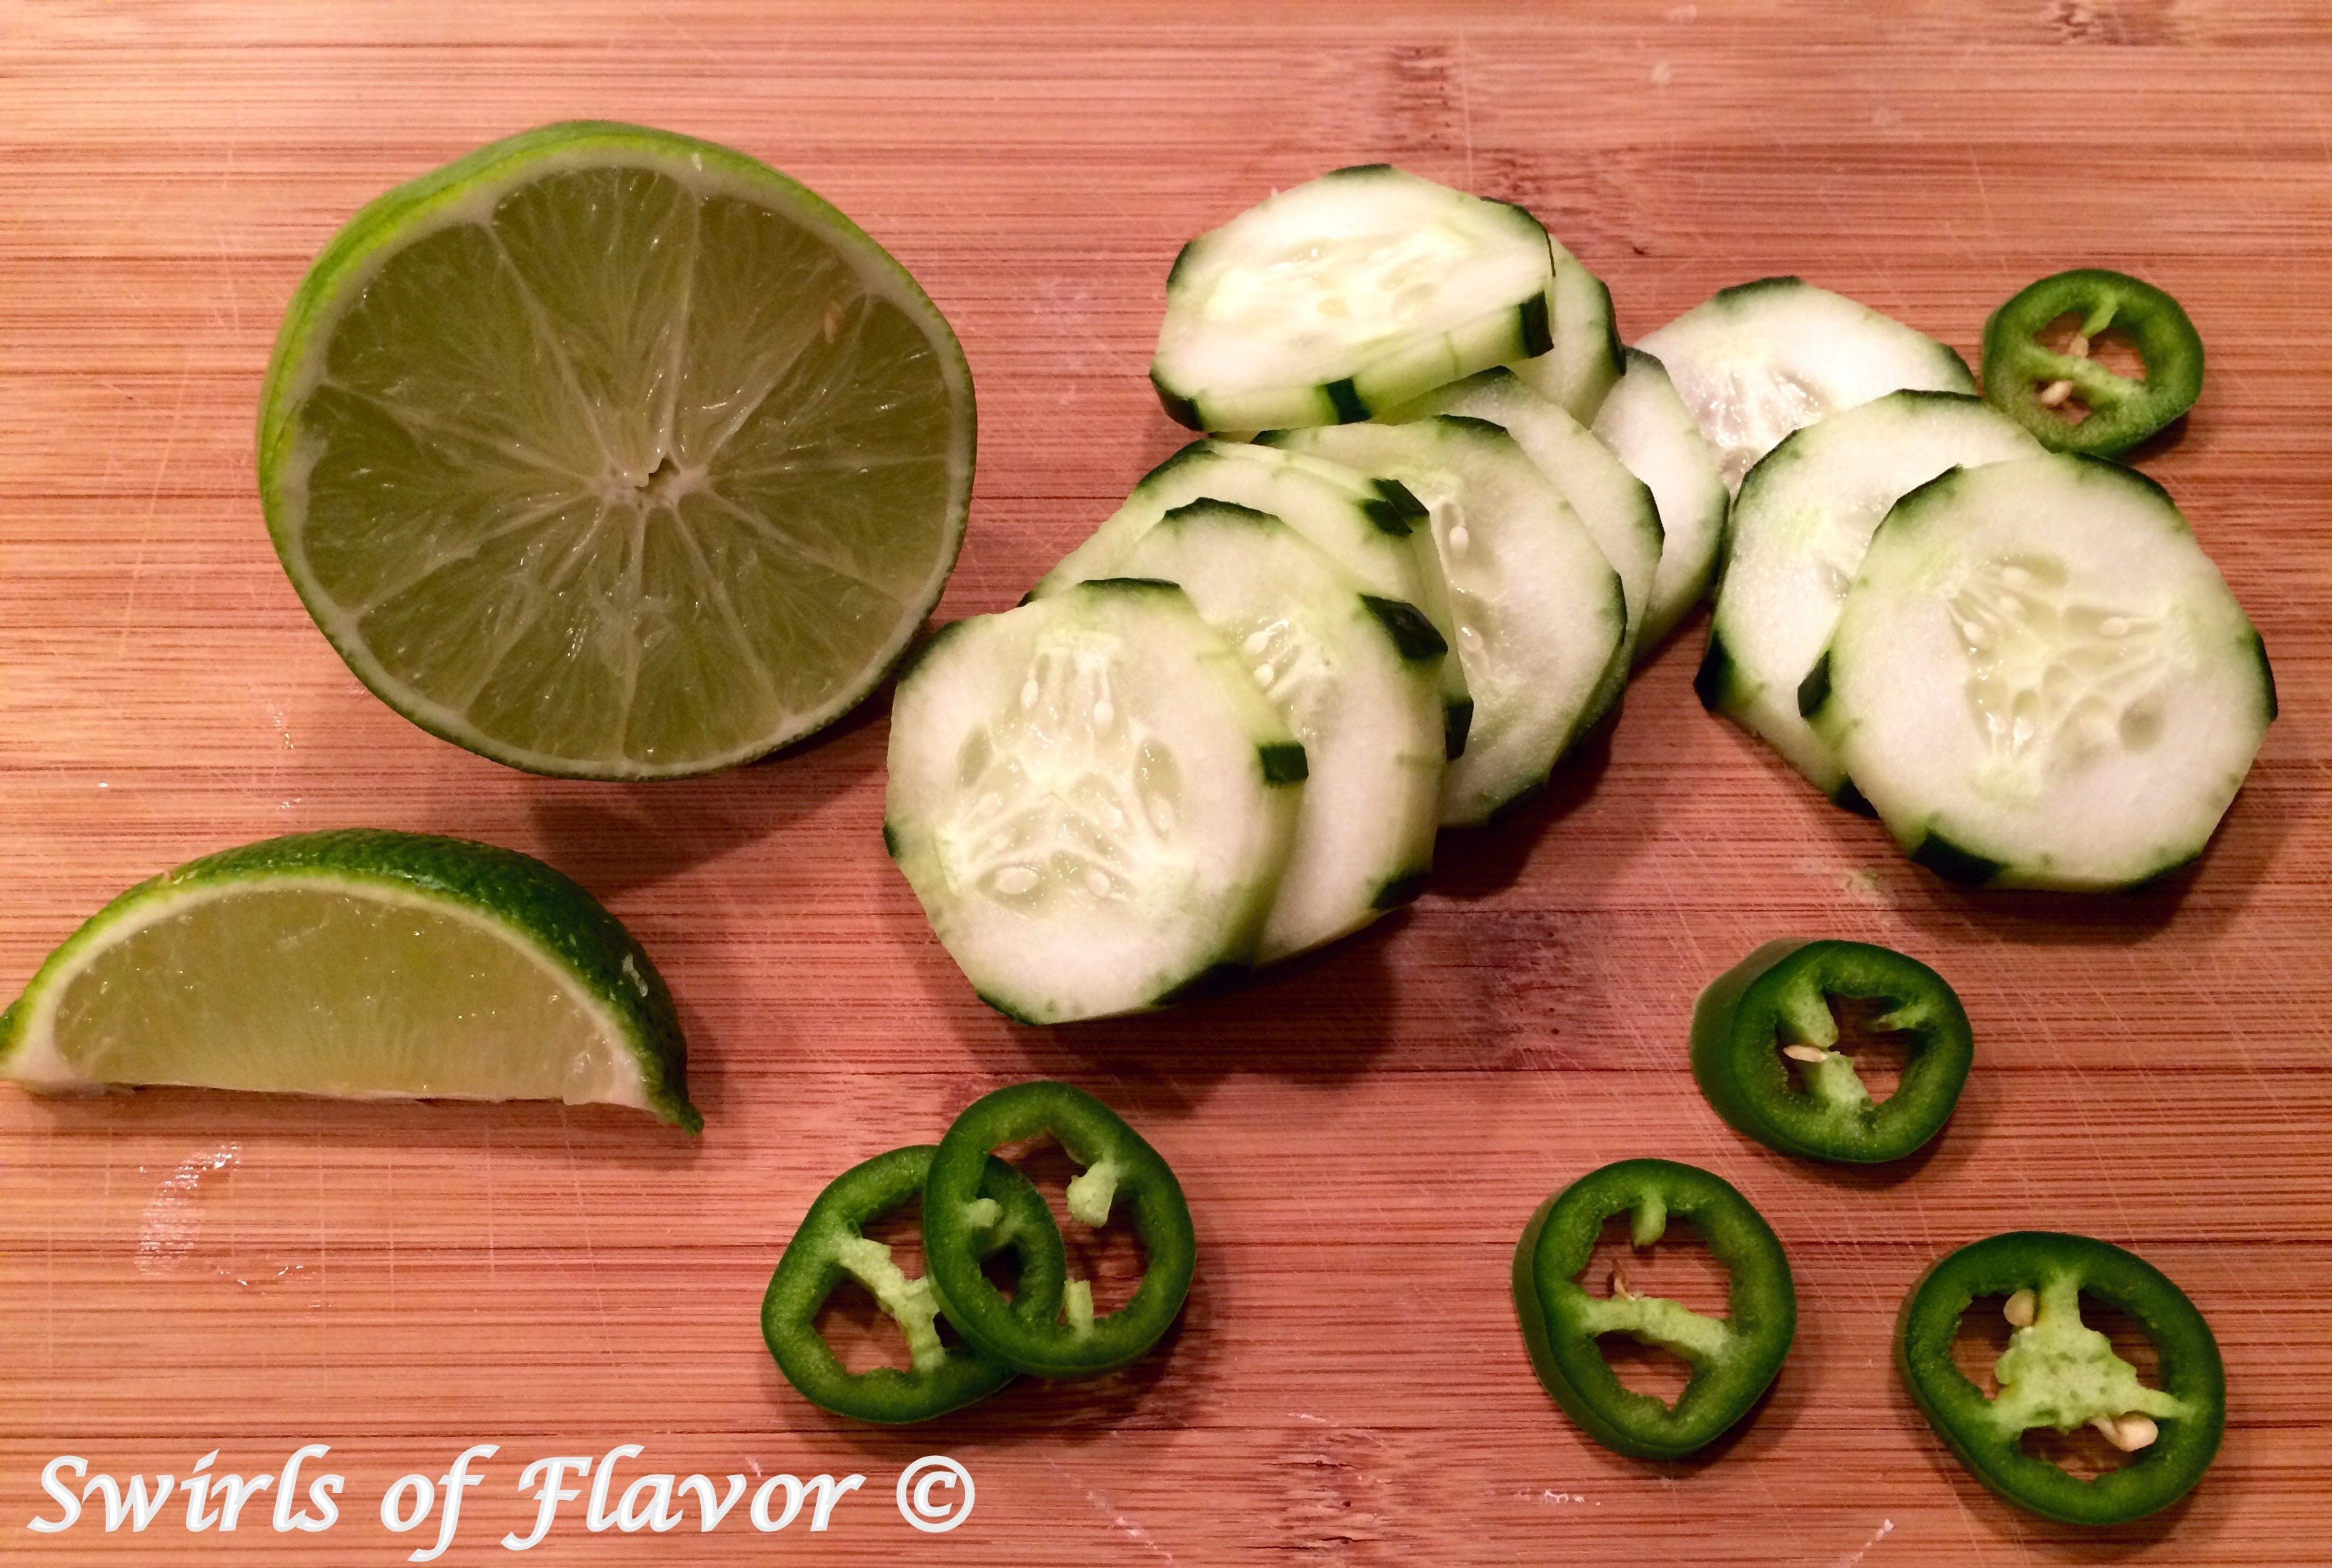 Cucumber, jalapeno and lime ingredients for Jalapeno Cucumber Margaritas recipe.